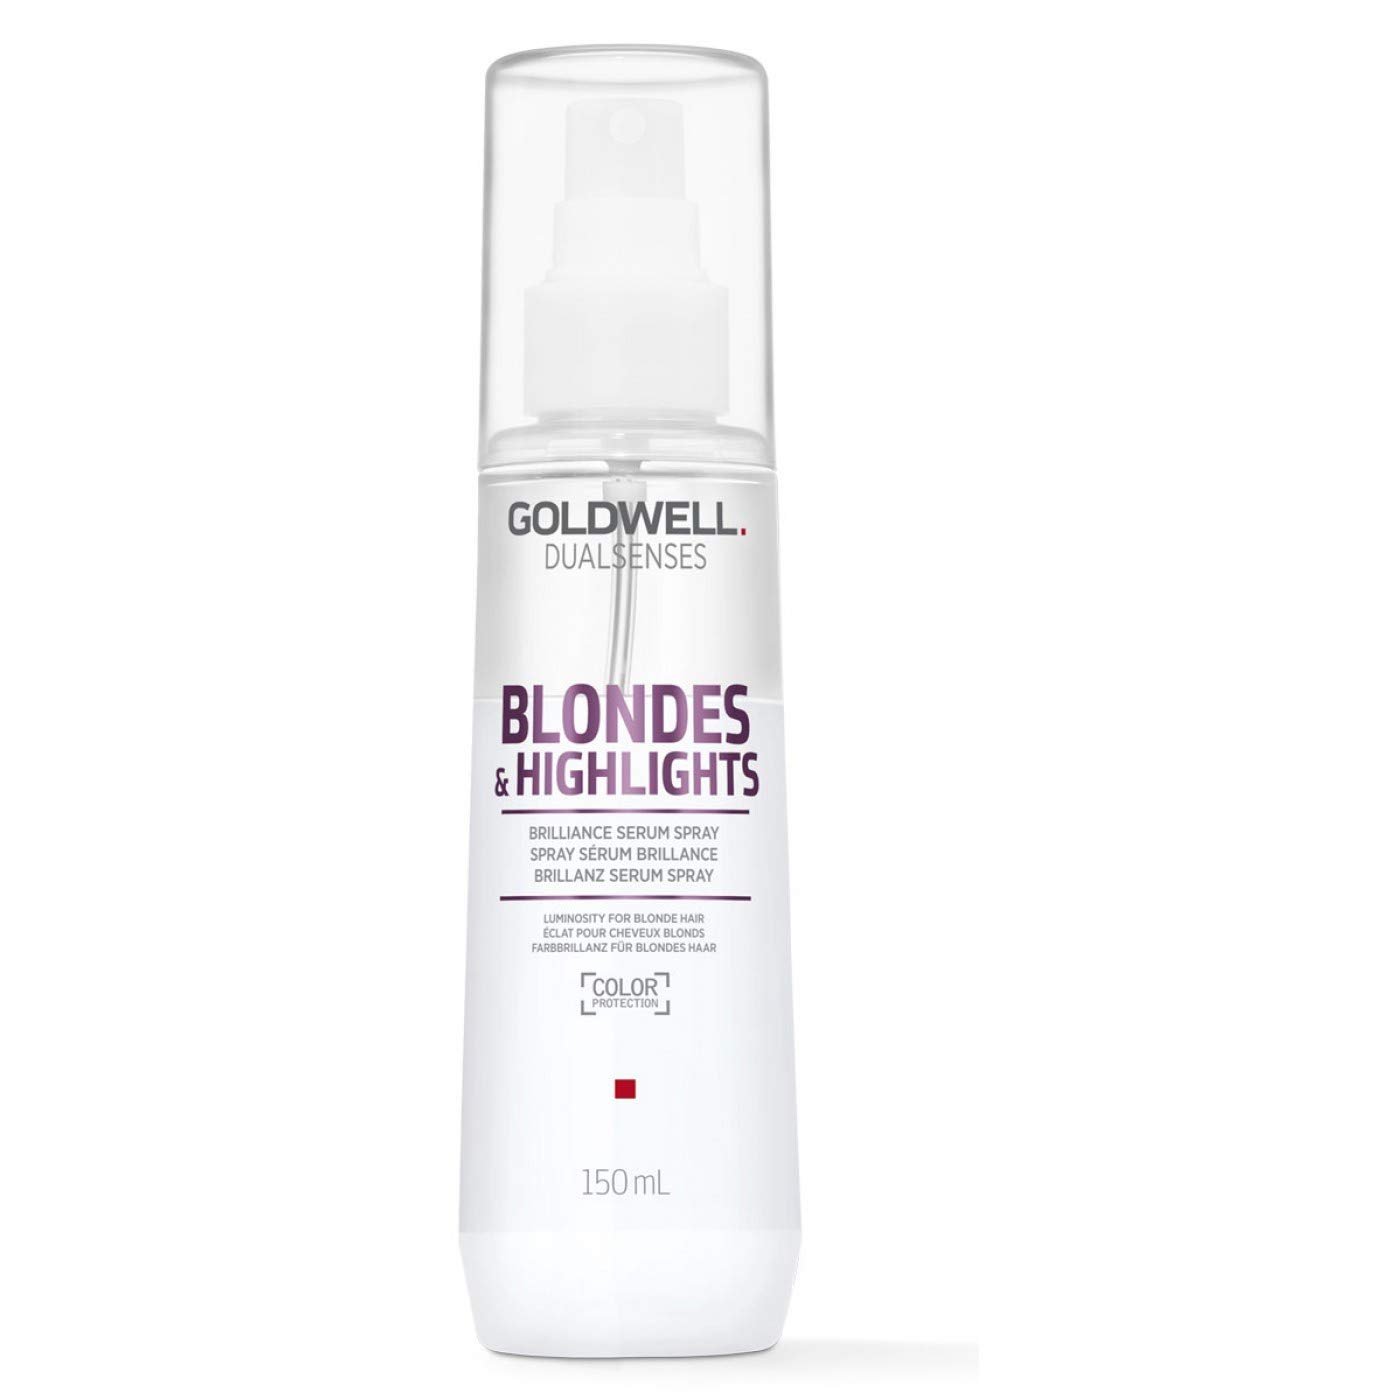 Goldwell Blondes and Highlights Brilliance Serum Spray